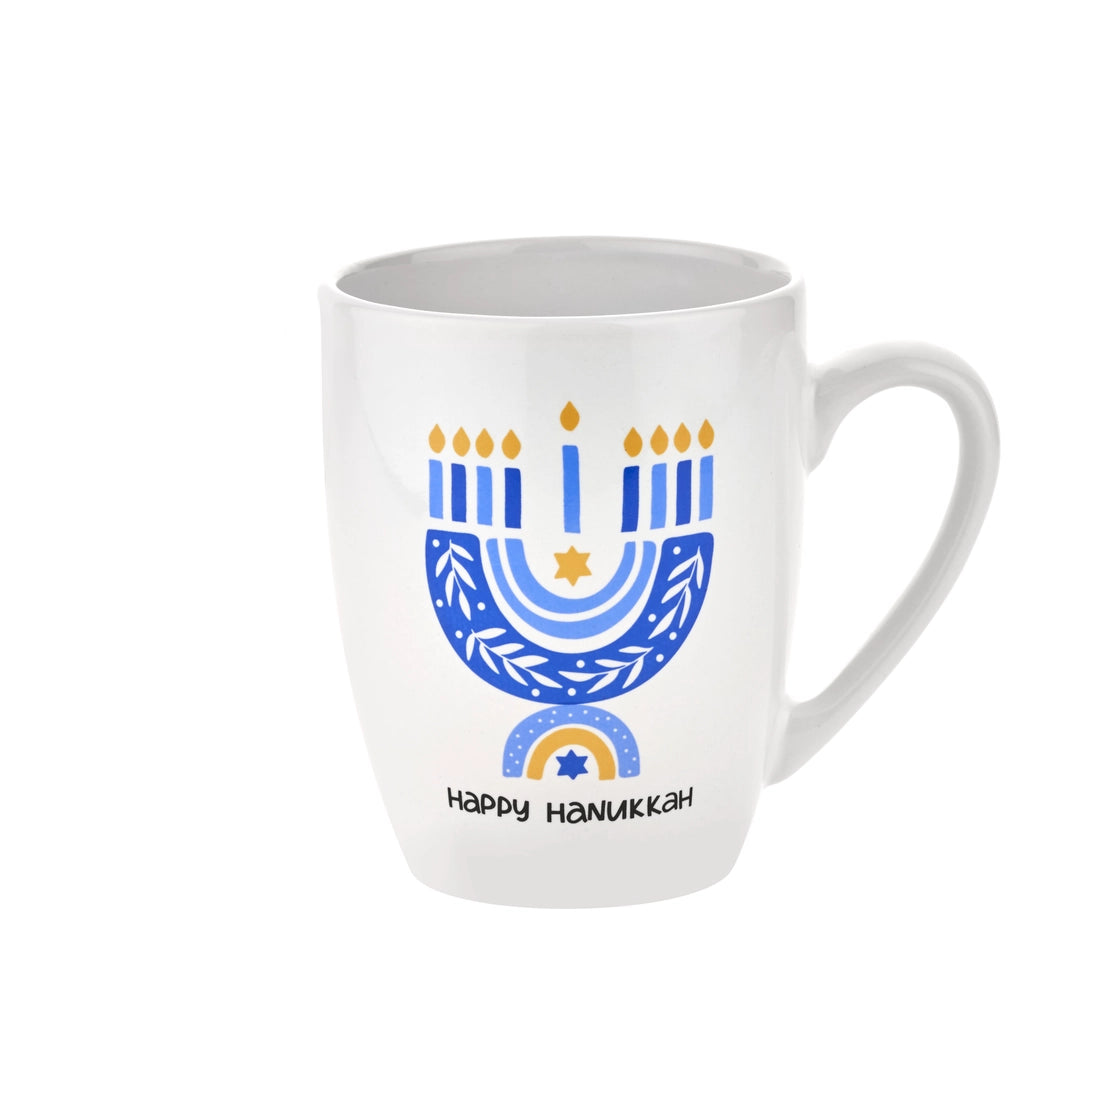 Hanukkah Mug - Menorah (1 Count) - Set With Style